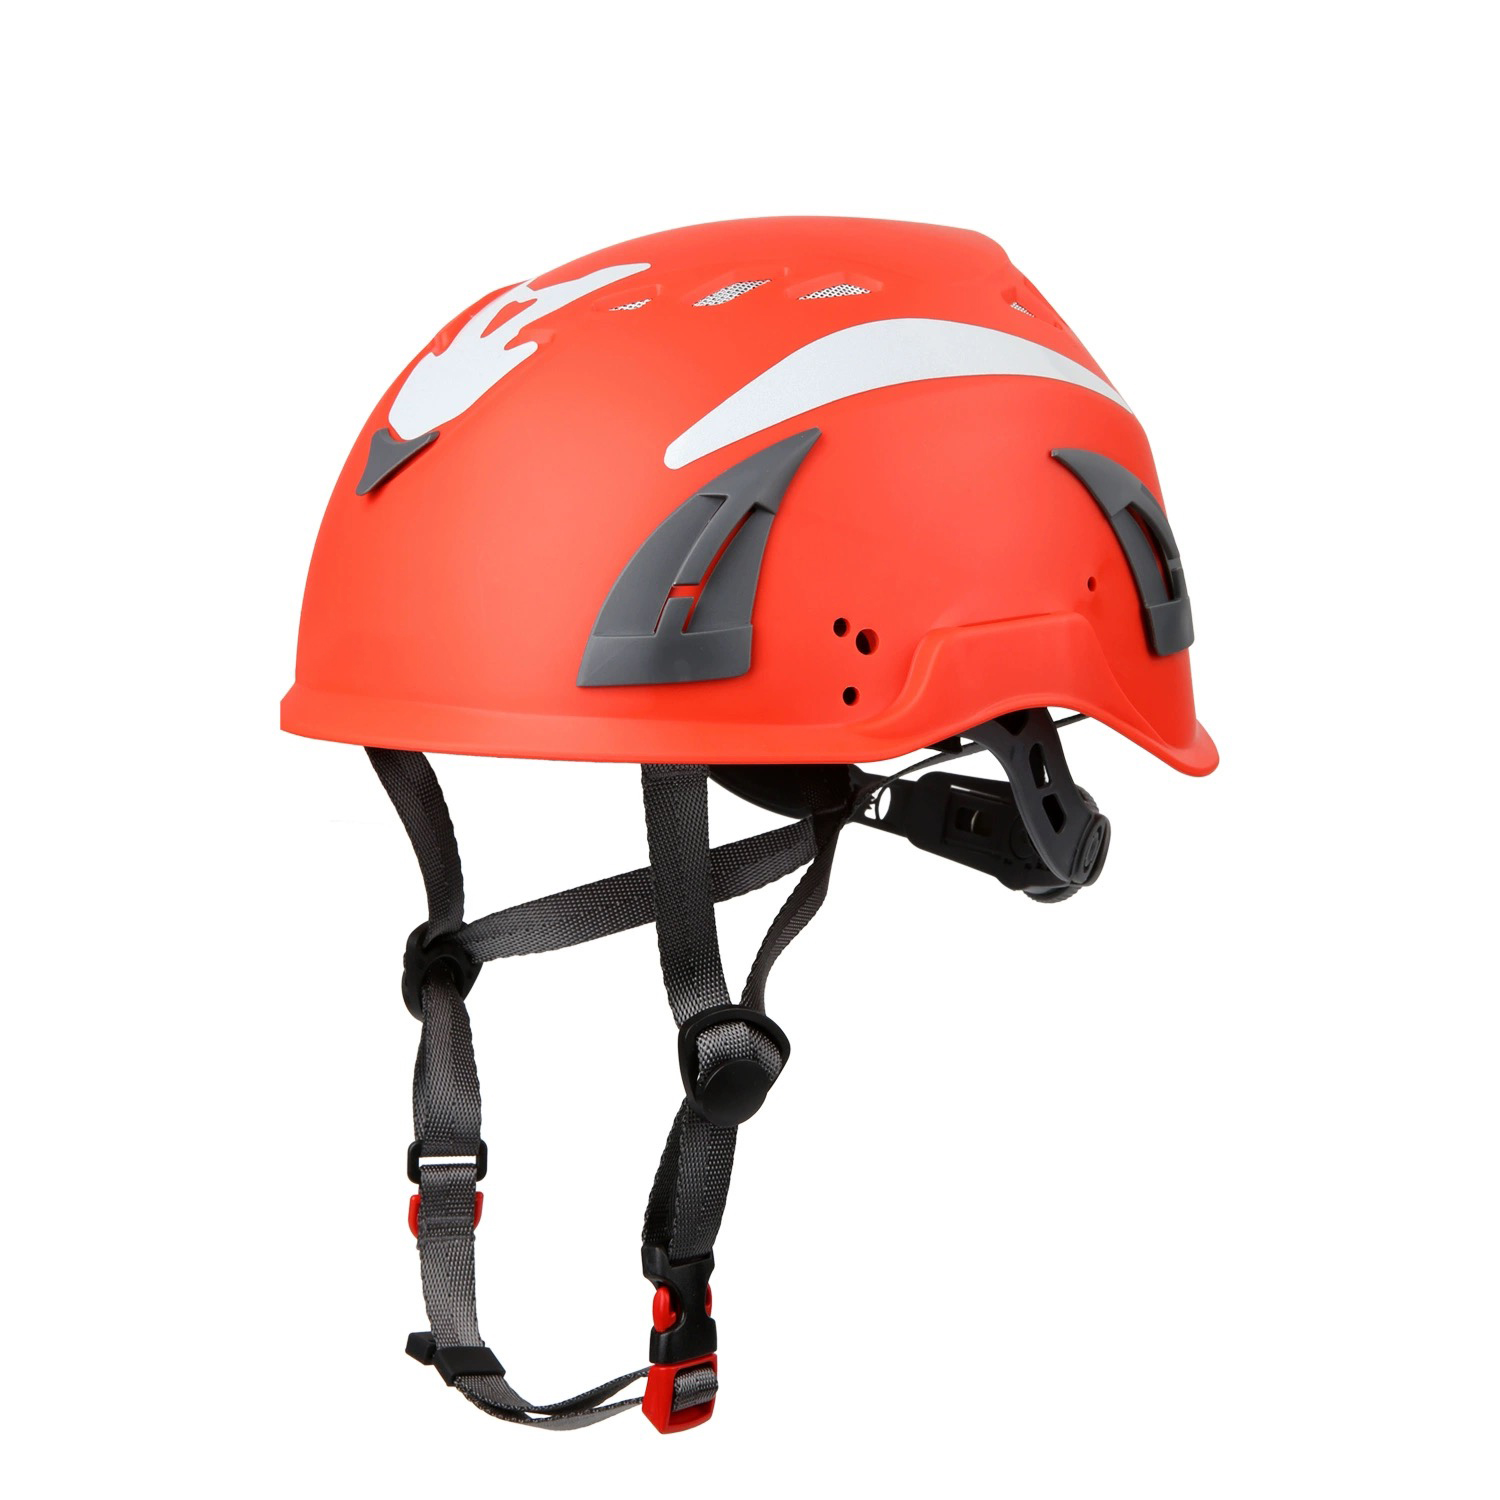 M6 Rescue Safety Helmet Hard Hat Worker Protective Helmet ABS Climbing Helmet